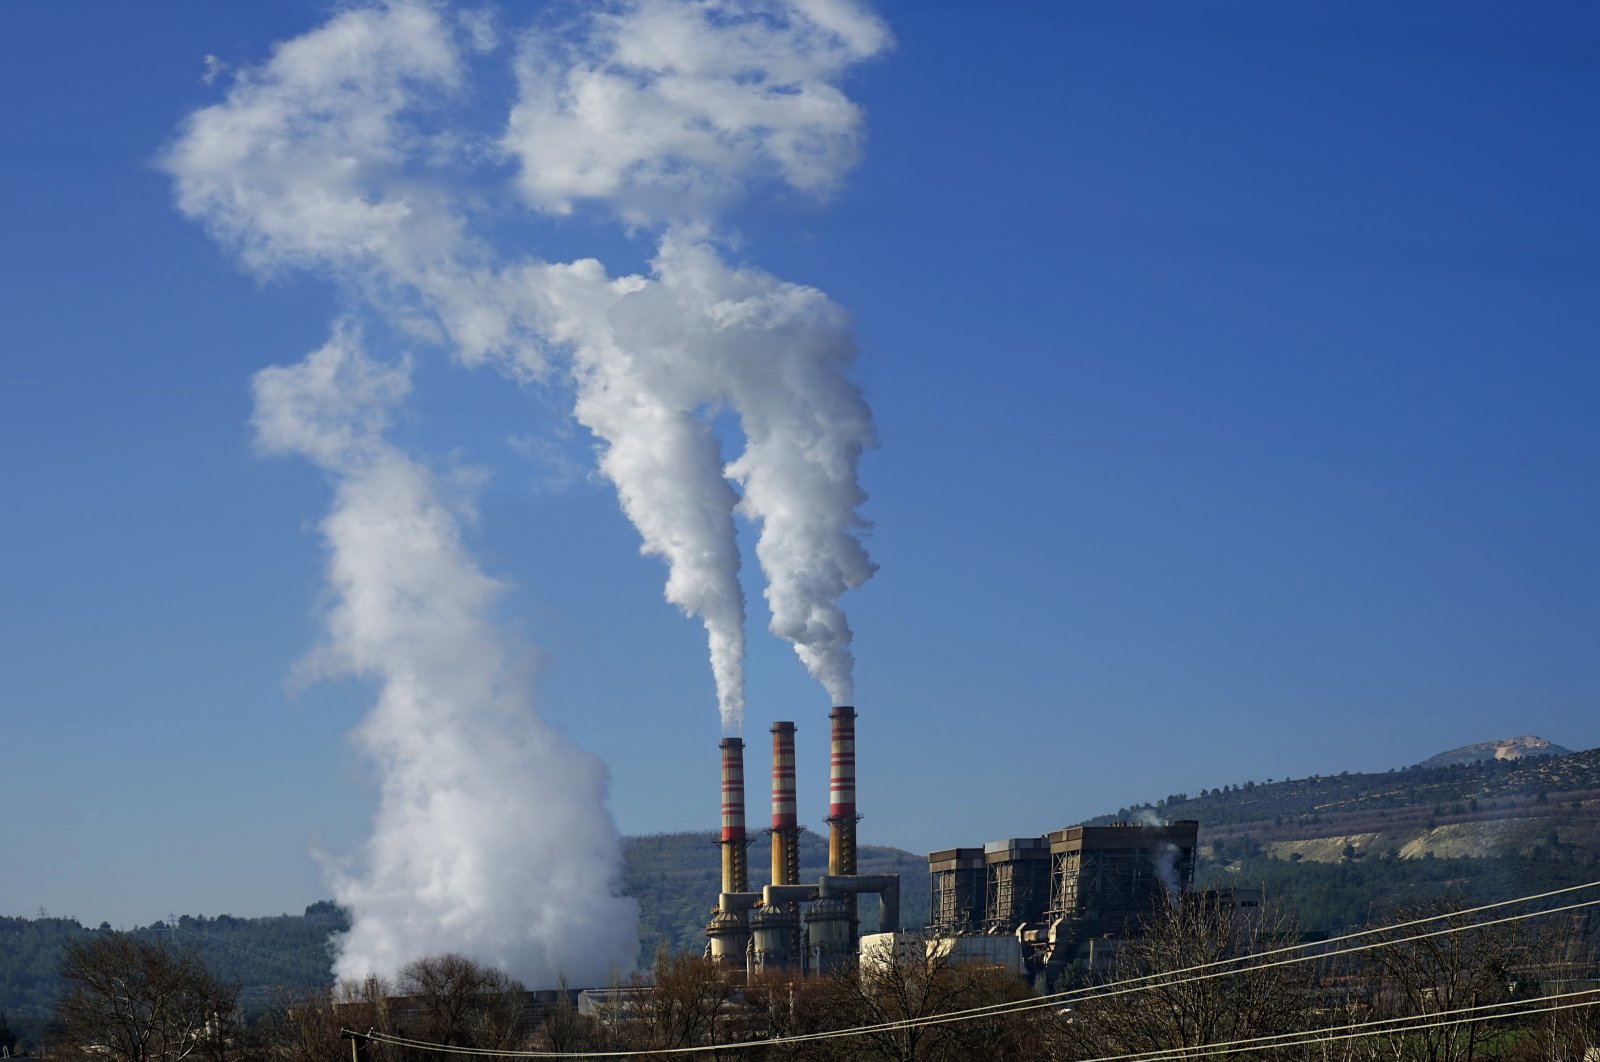 The thermo-electric power plant in Yatağan, Muğla, southern Turkey, Jan. 20, 2020. (Shutterstock Photo)